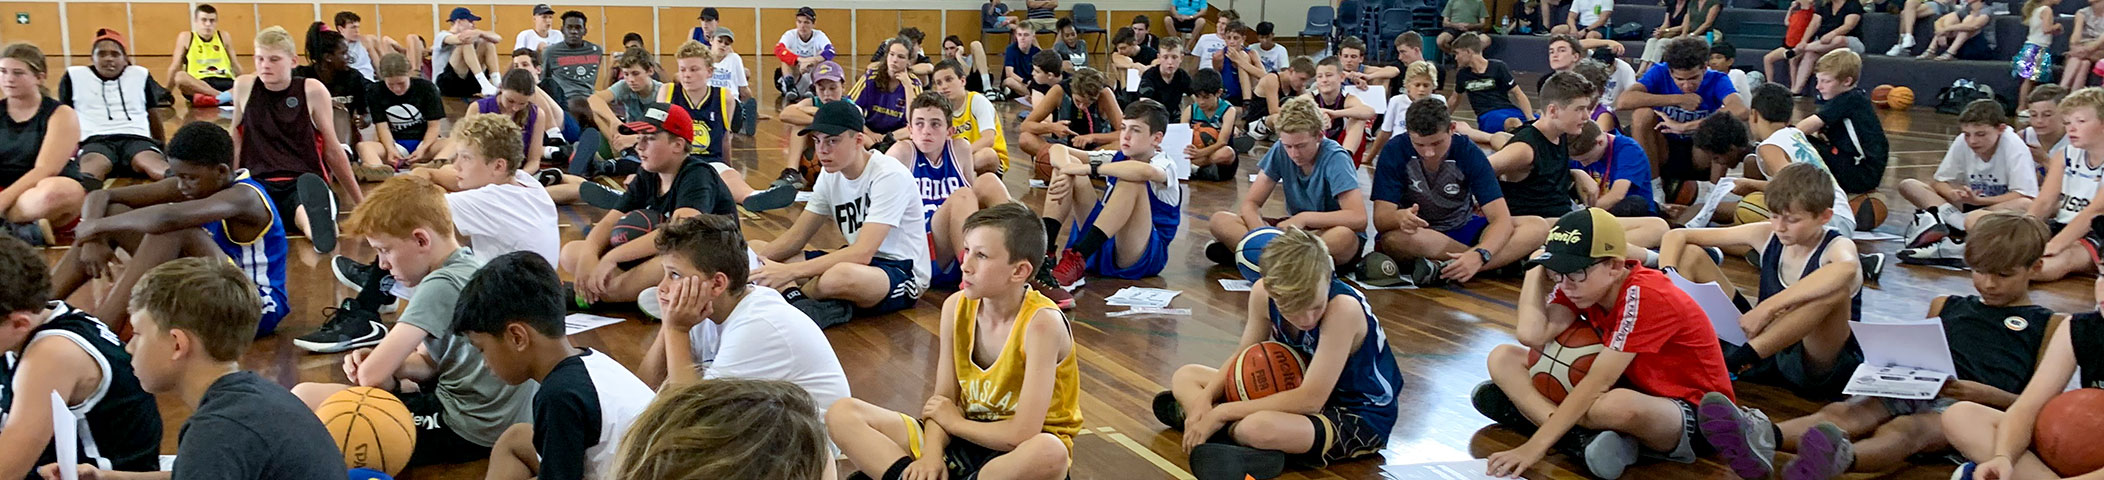 2020 Toowoomba Basketball Supercamp Session